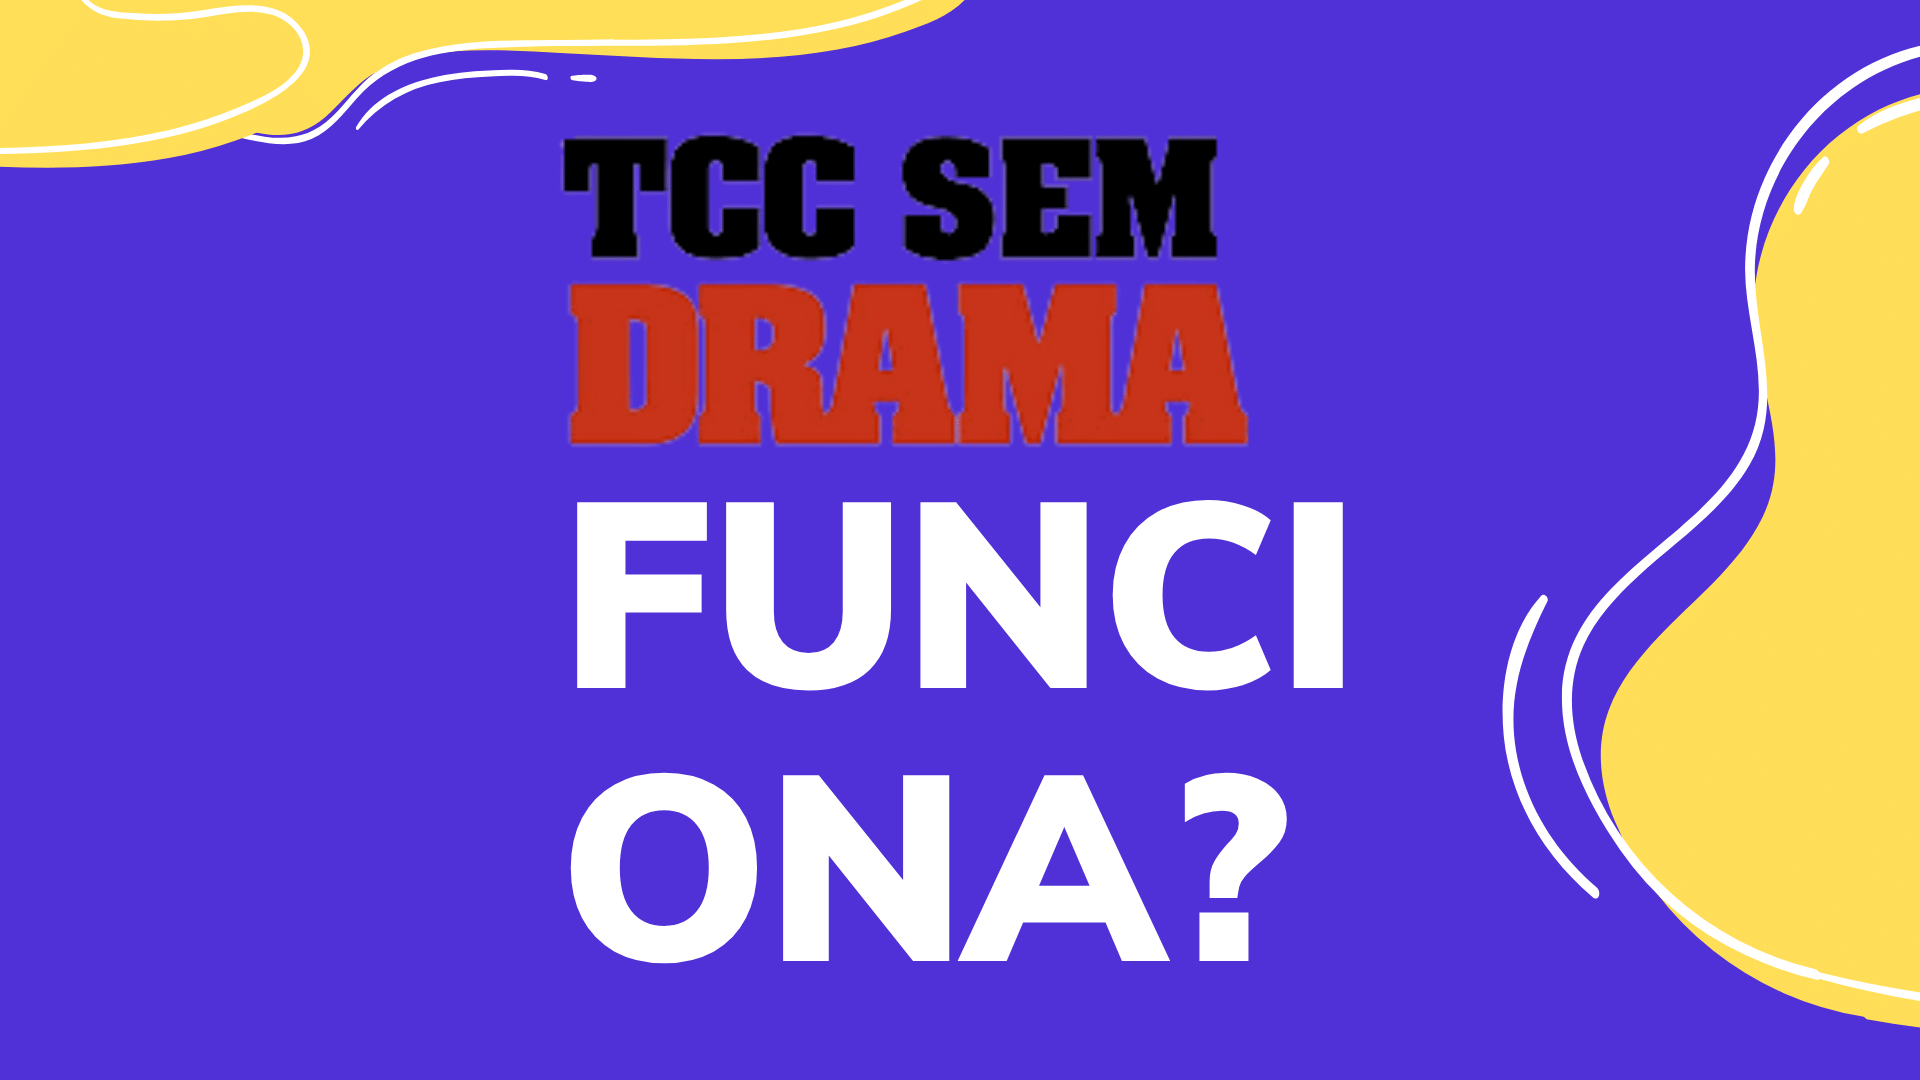 Tcc Sem Drama Funciona?